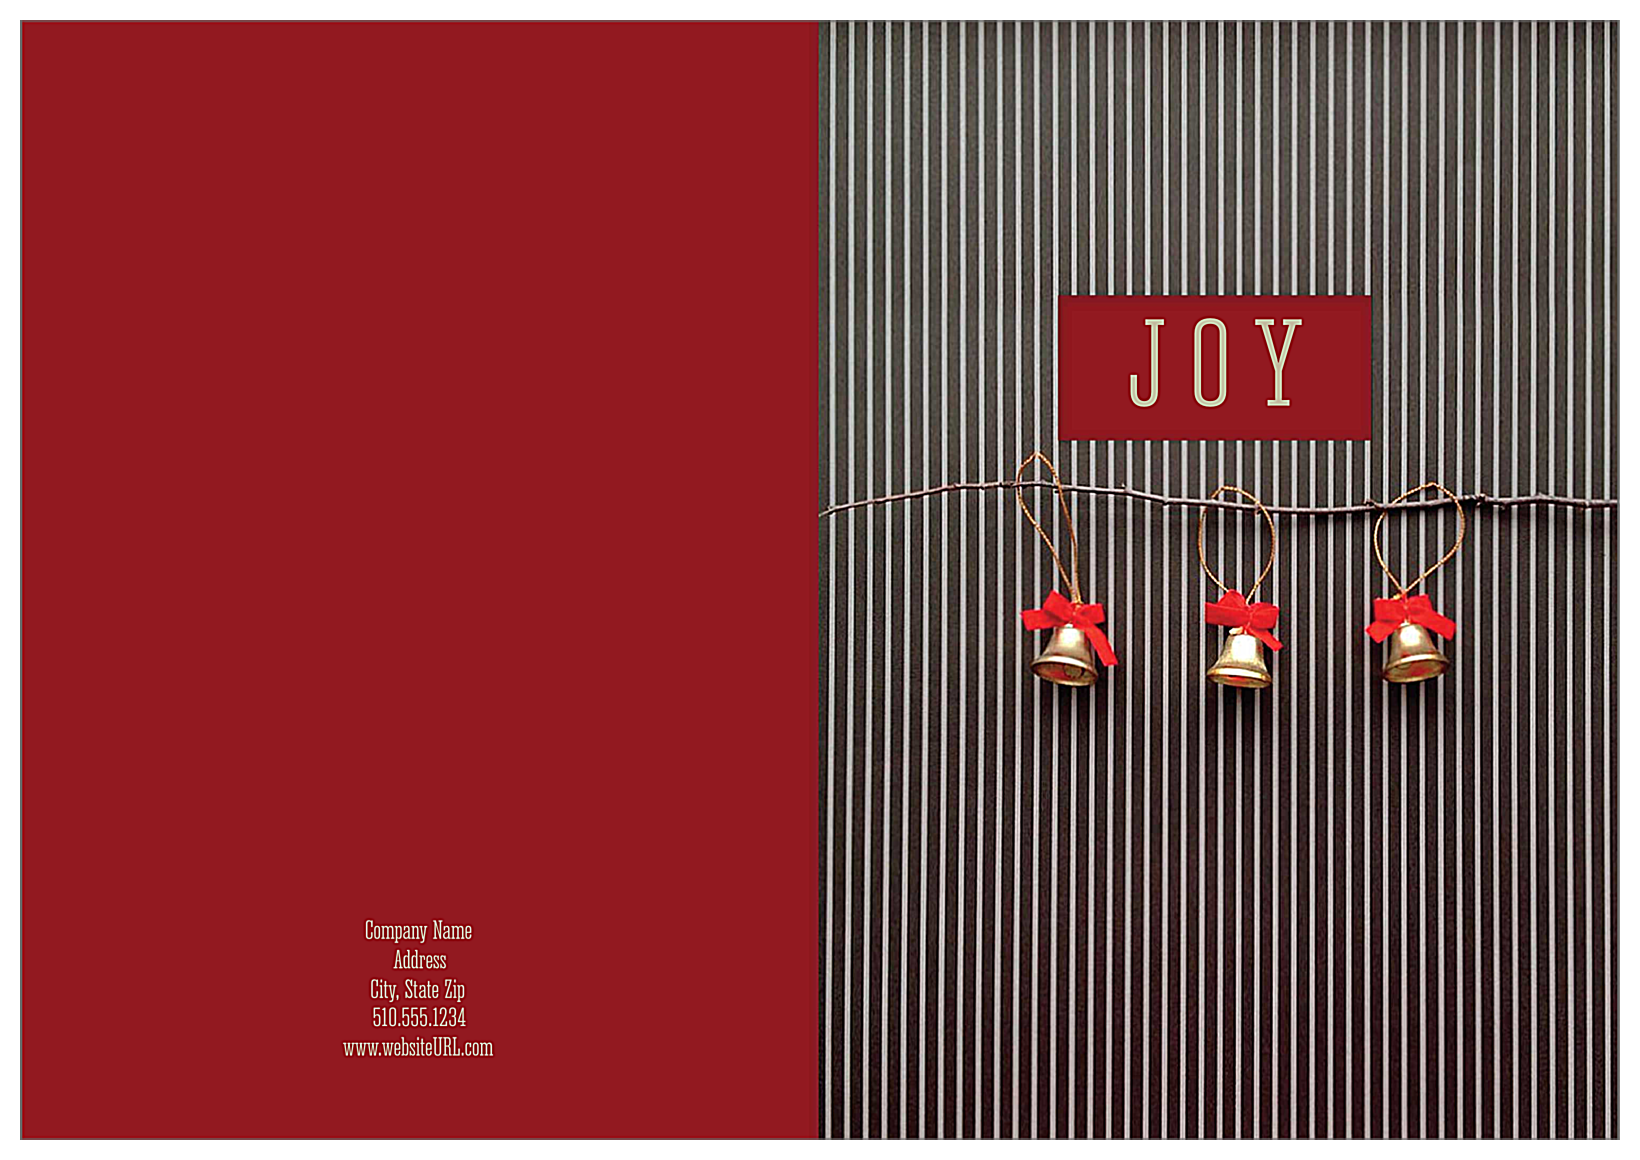 Striped Joy front - Greeting Cards Maker